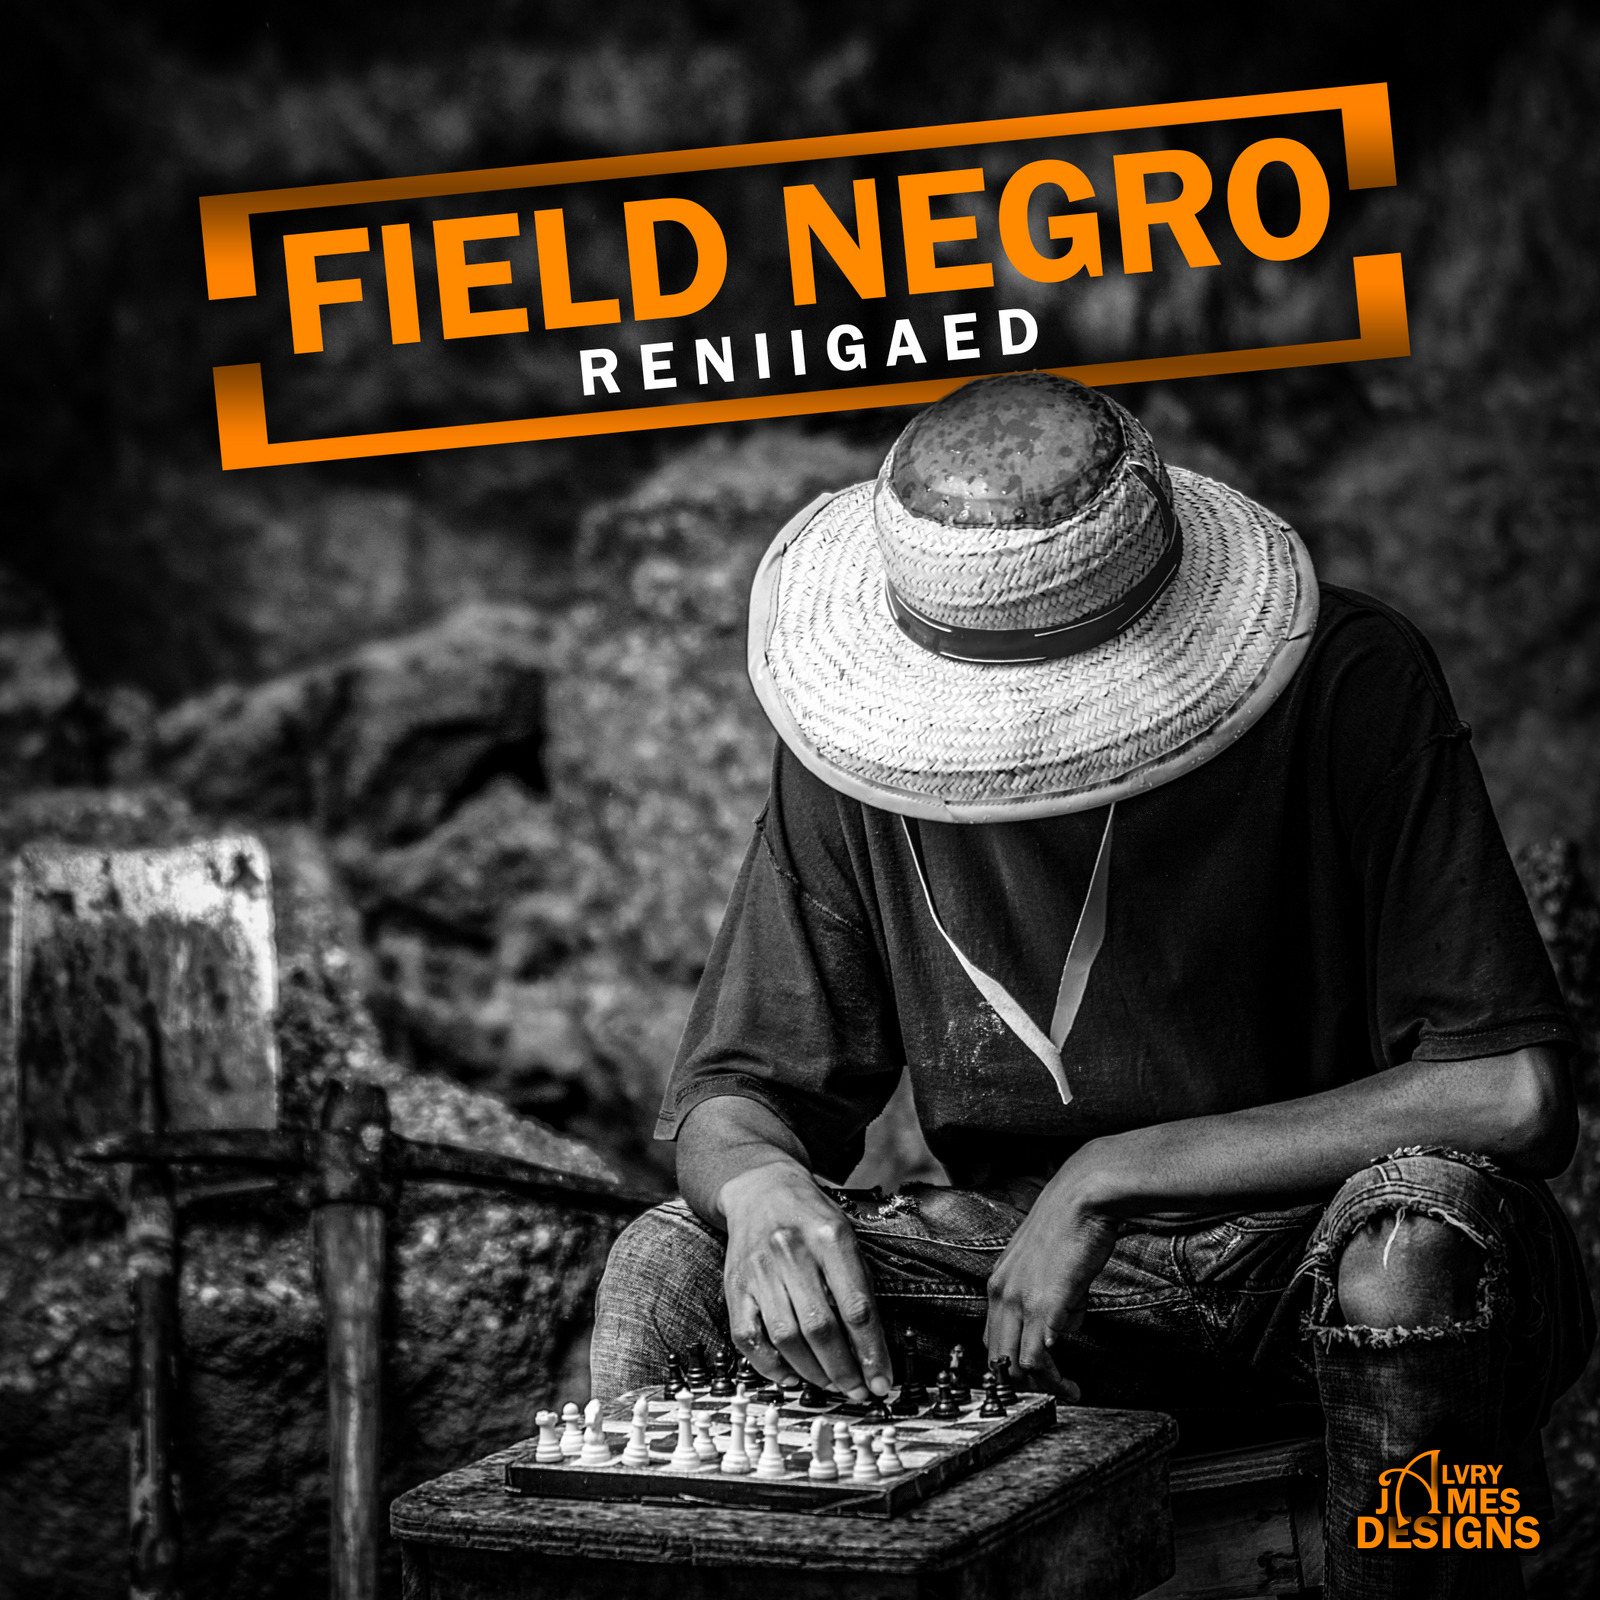 Field Negro